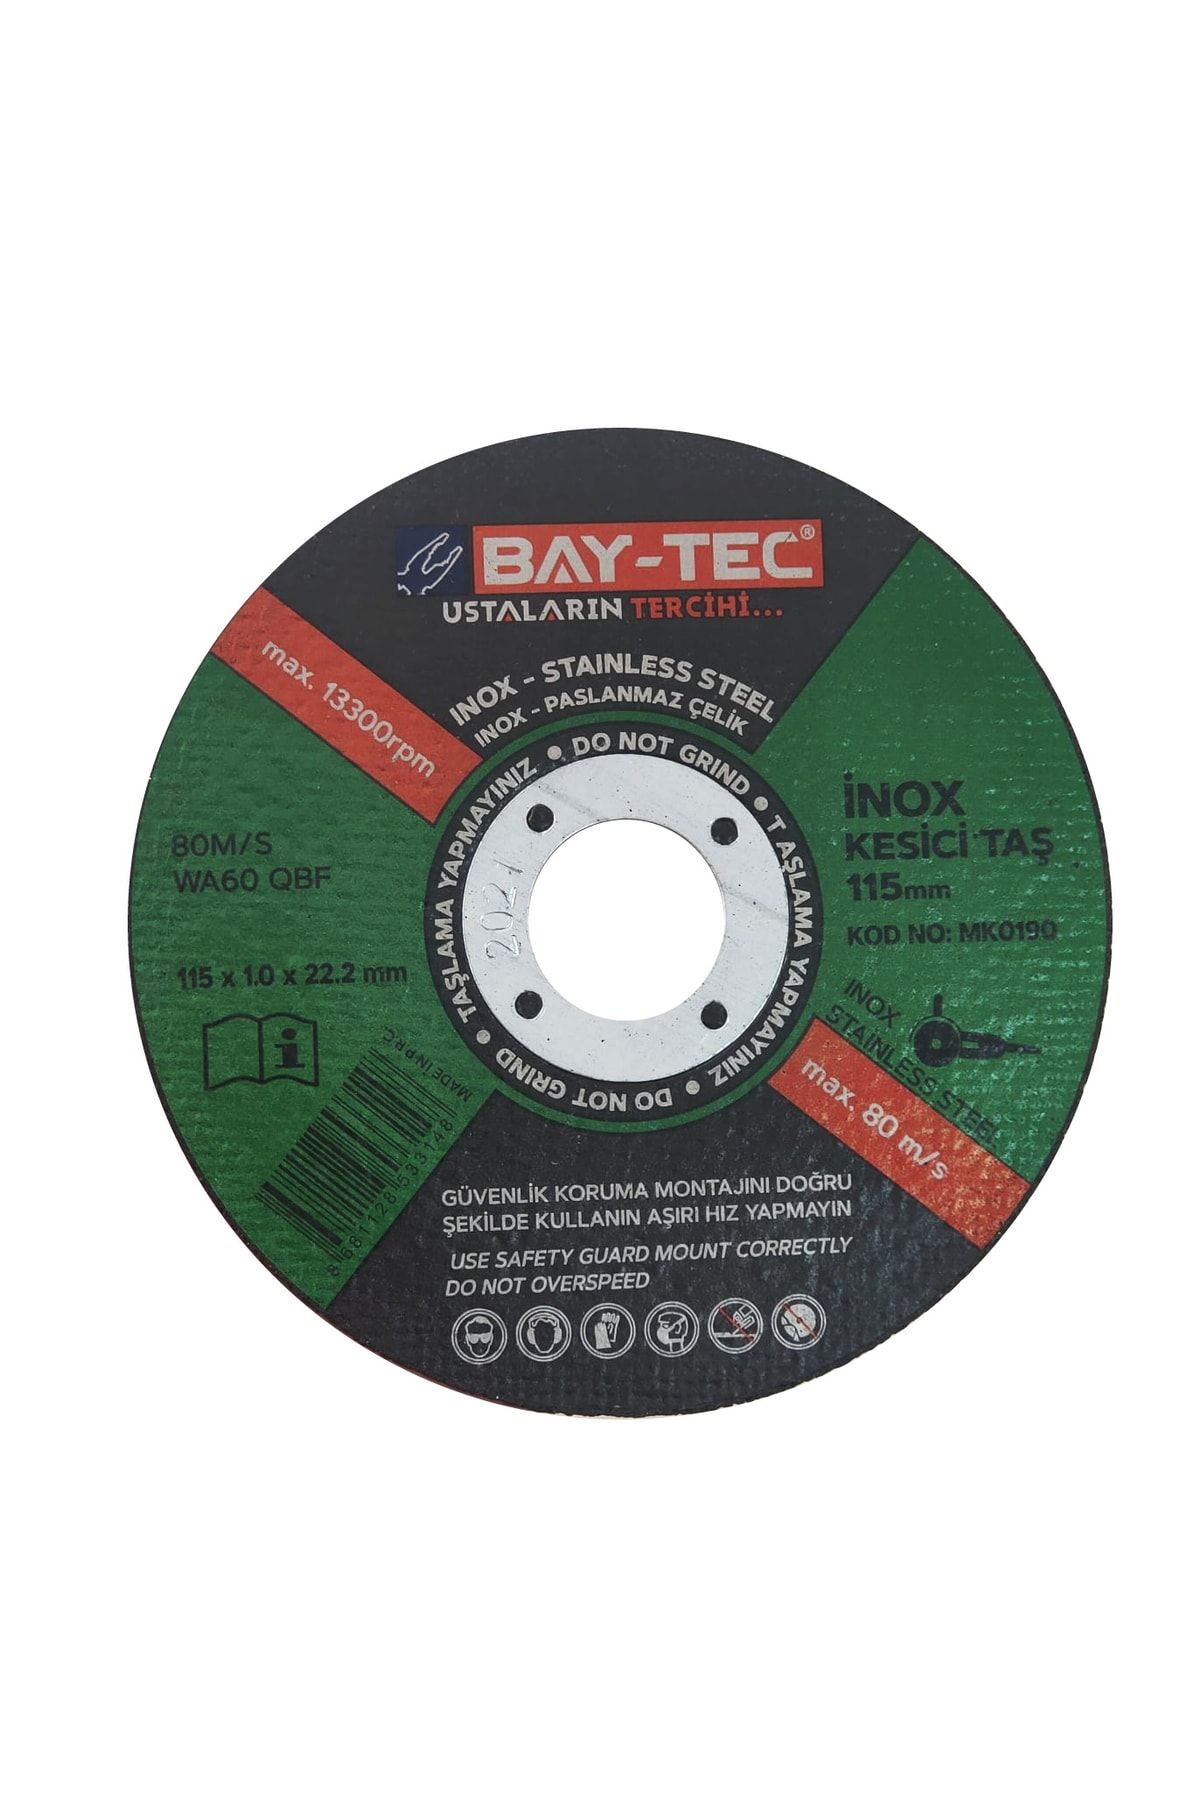 Baytec Bay-tec Mk0190 Taşlama Makinesi Inox Kesici Taş 115mm